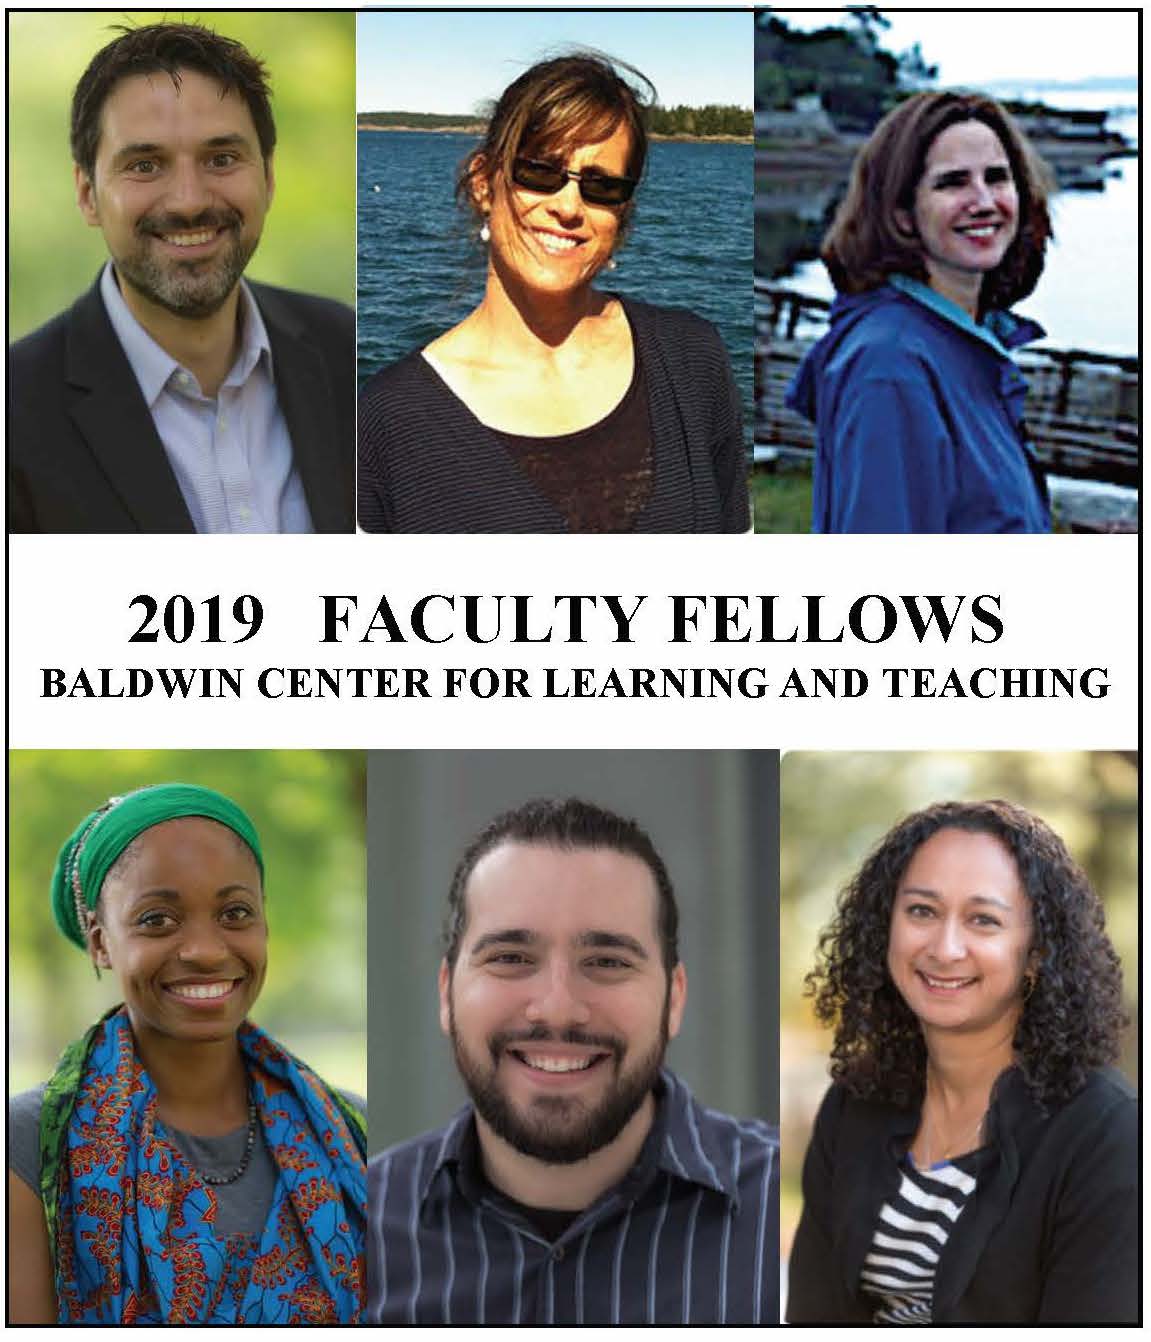 The 2019 faculty fellows